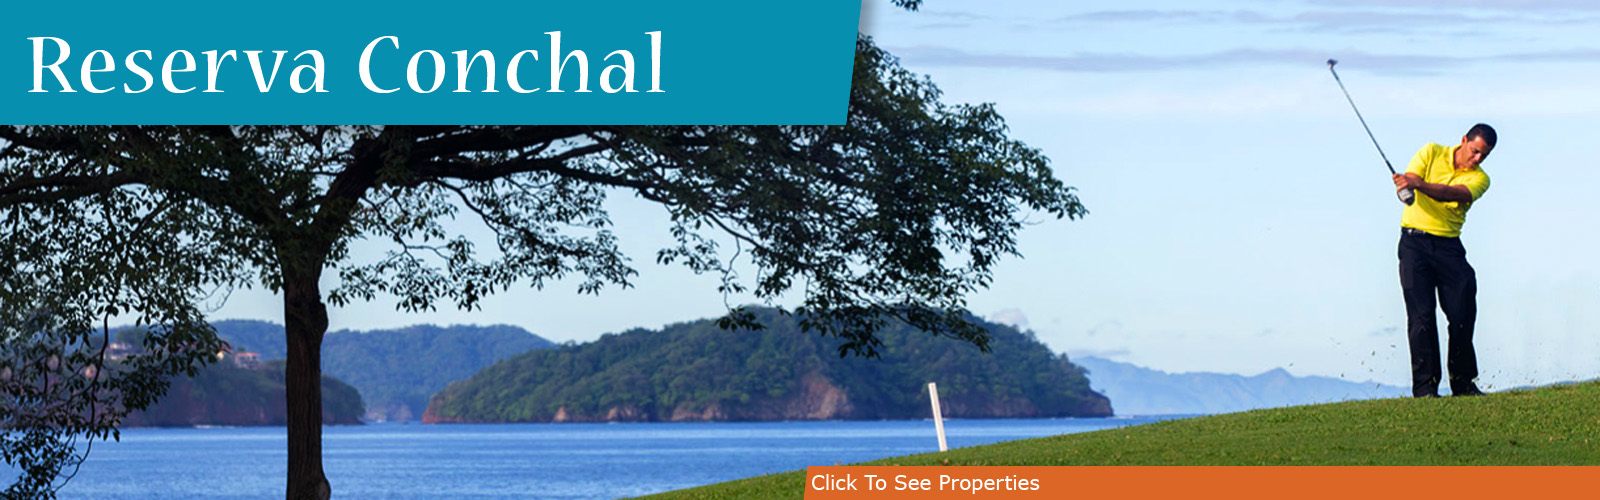 Reserva Conchal-Costa Rica Real Estate For Sale Homes Condos Villas Town Homes-Golf